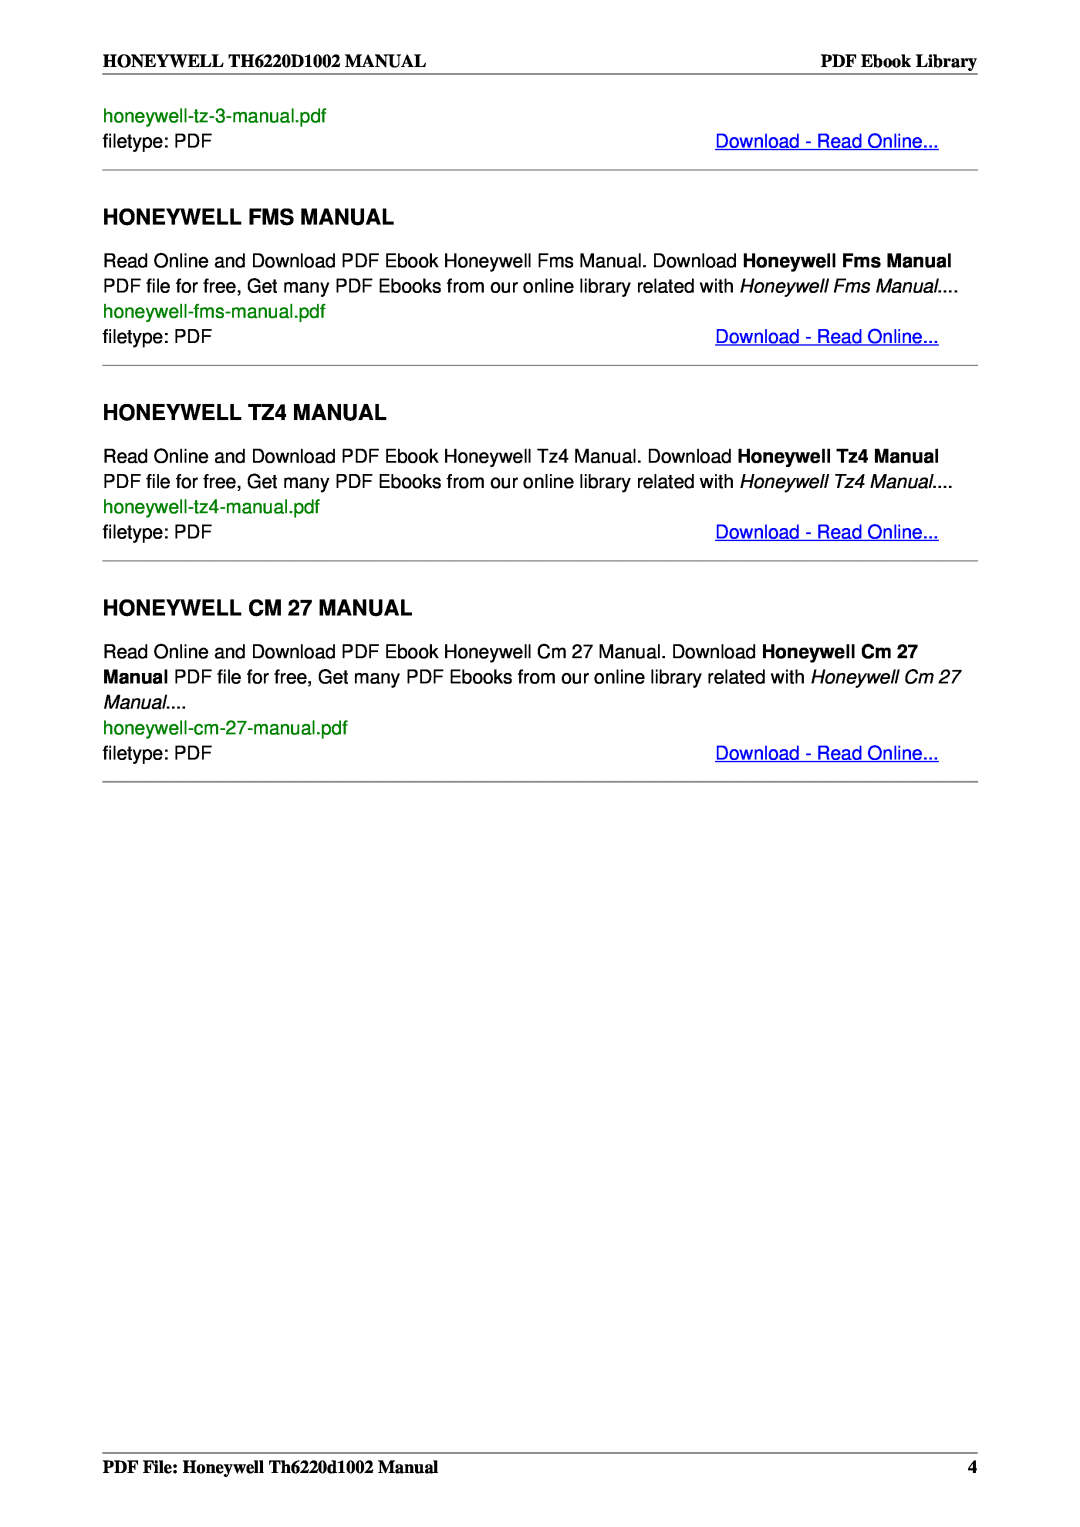 Honeywell TH6220D1002 Honeywell Fms Manual, HONEYWELL TZ4 MANUAL, HONEYWELL CM 27 MANUAL, honeywell-fms-manual.pdf 